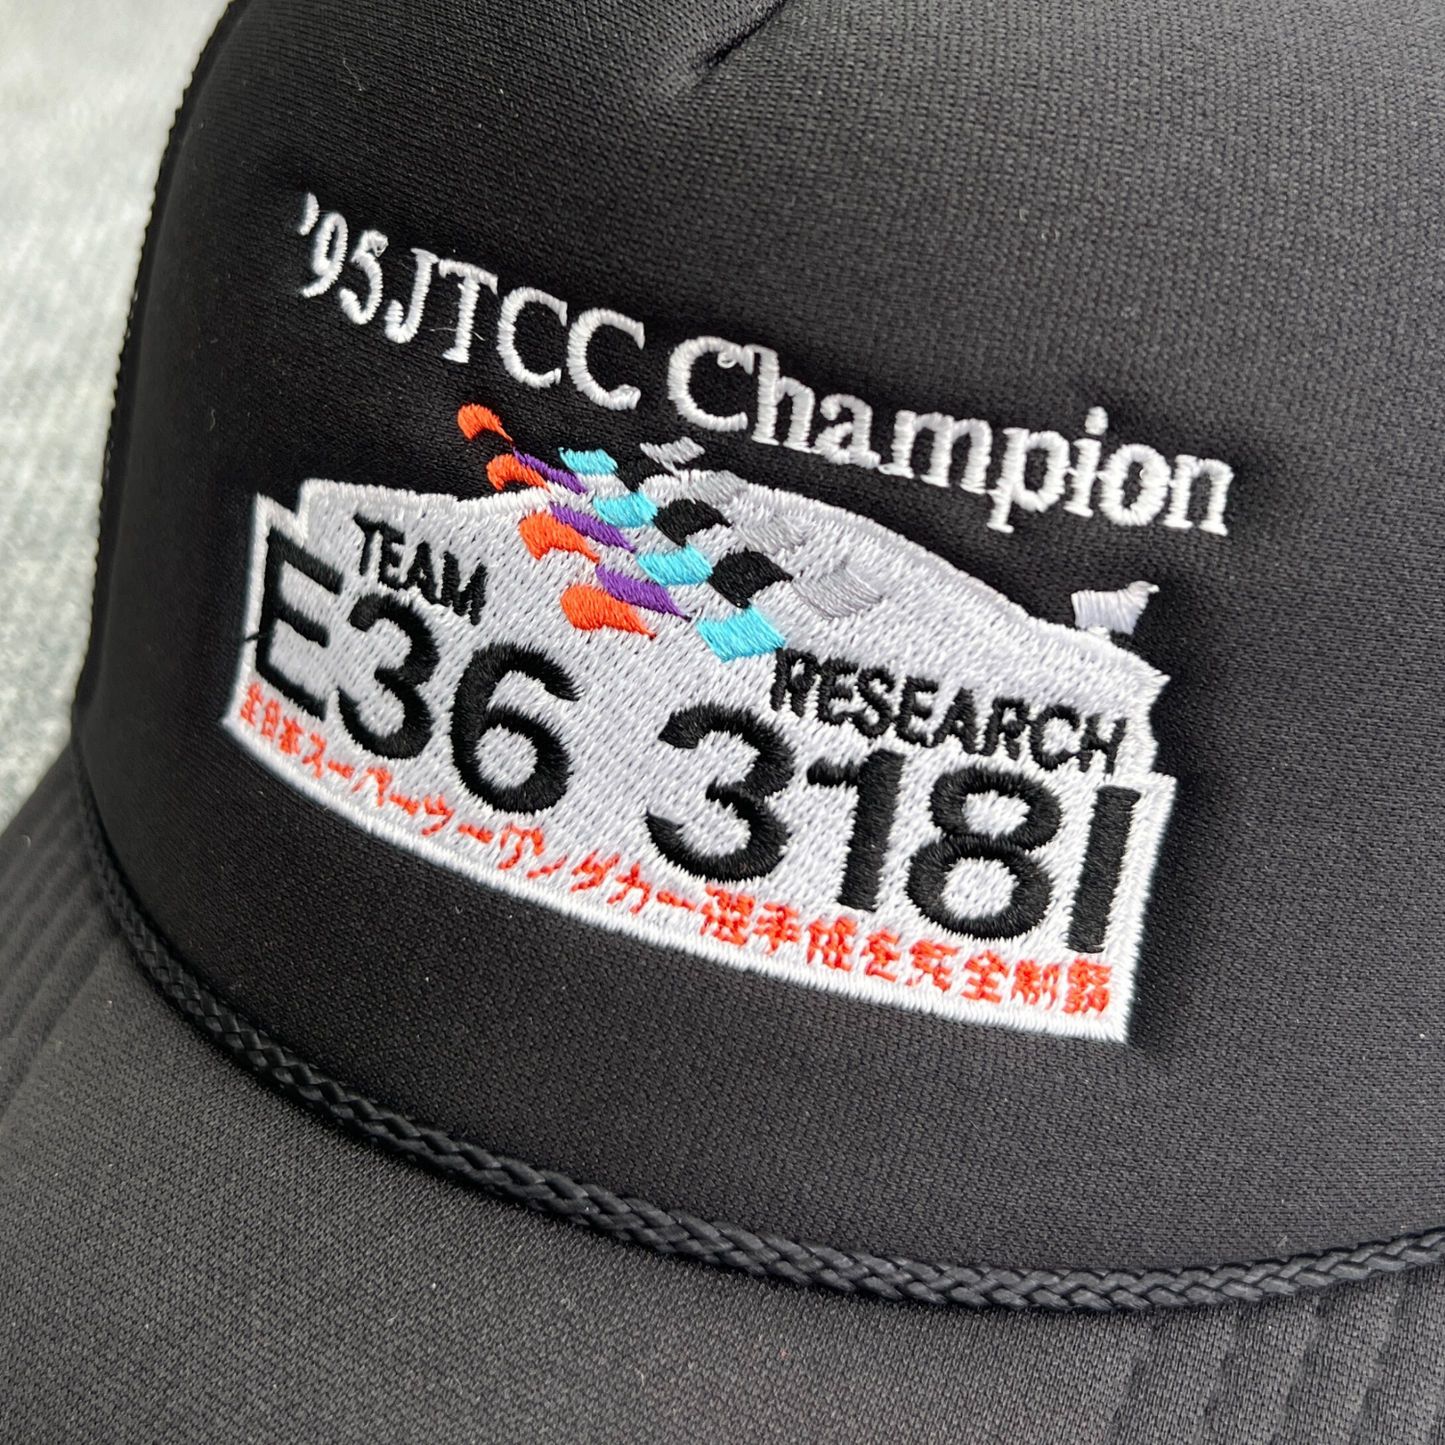 95' JTCC champ trucker cap